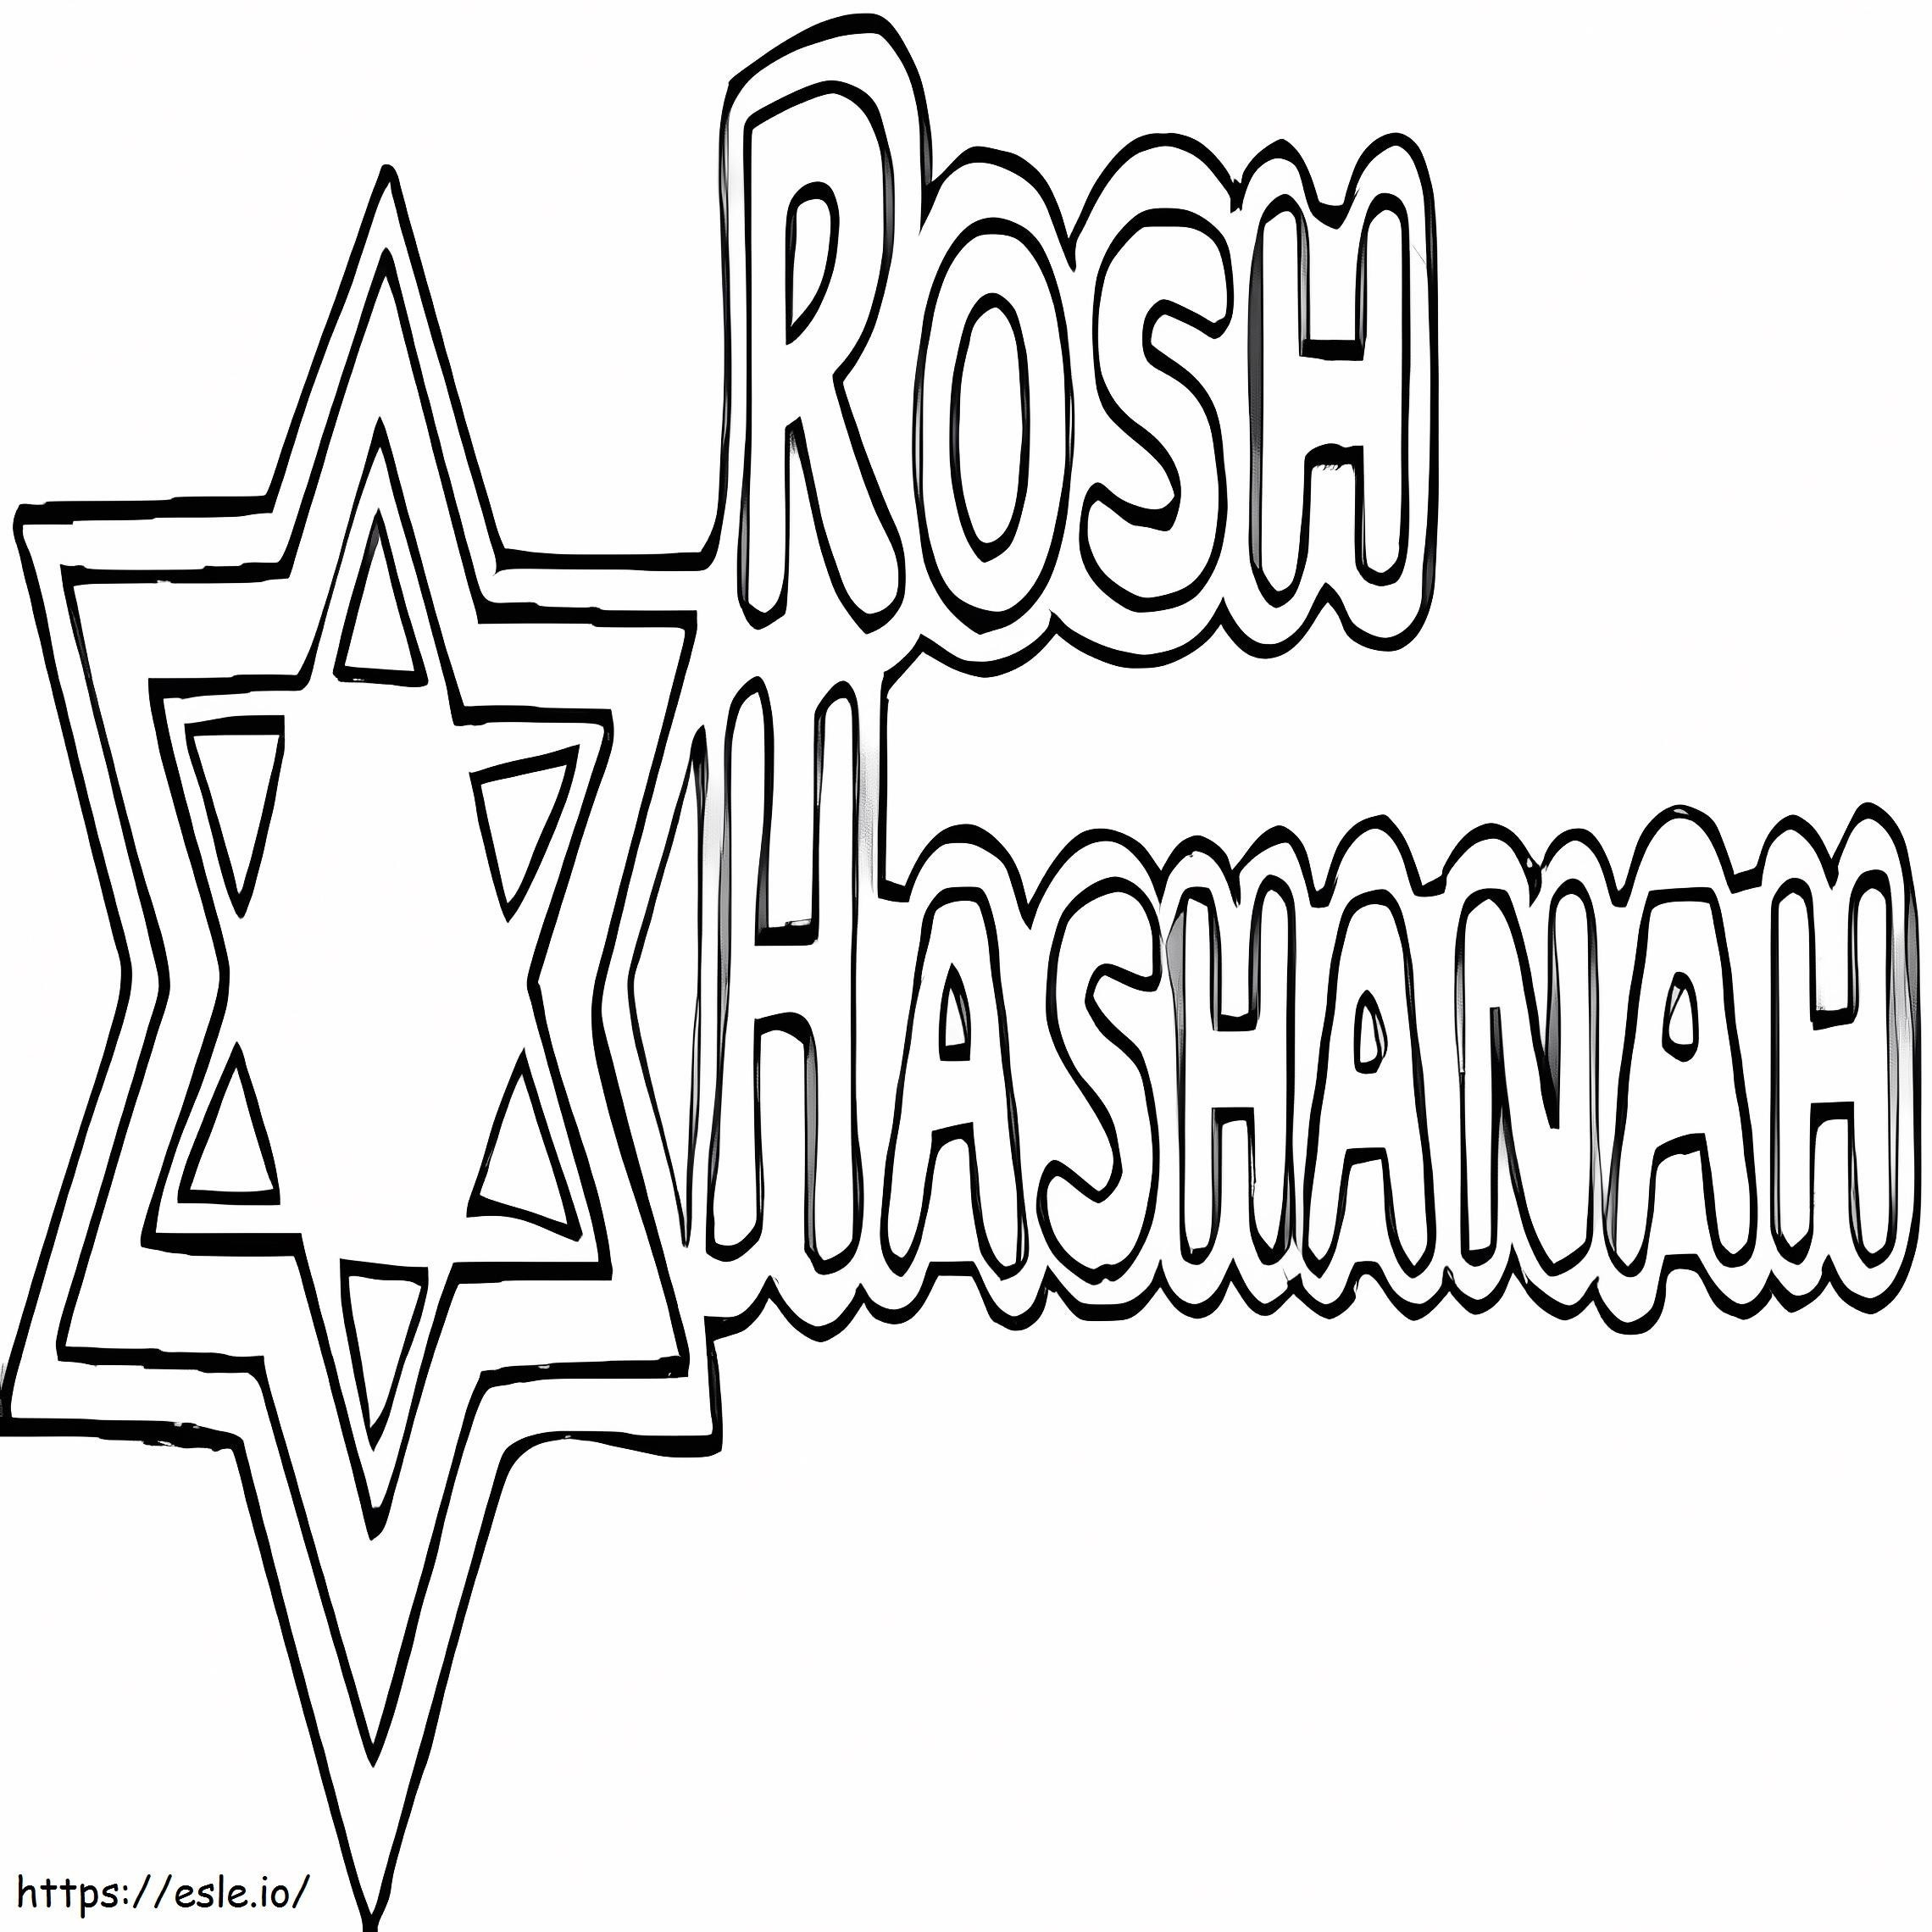 Free Rosh Hashanah coloring page